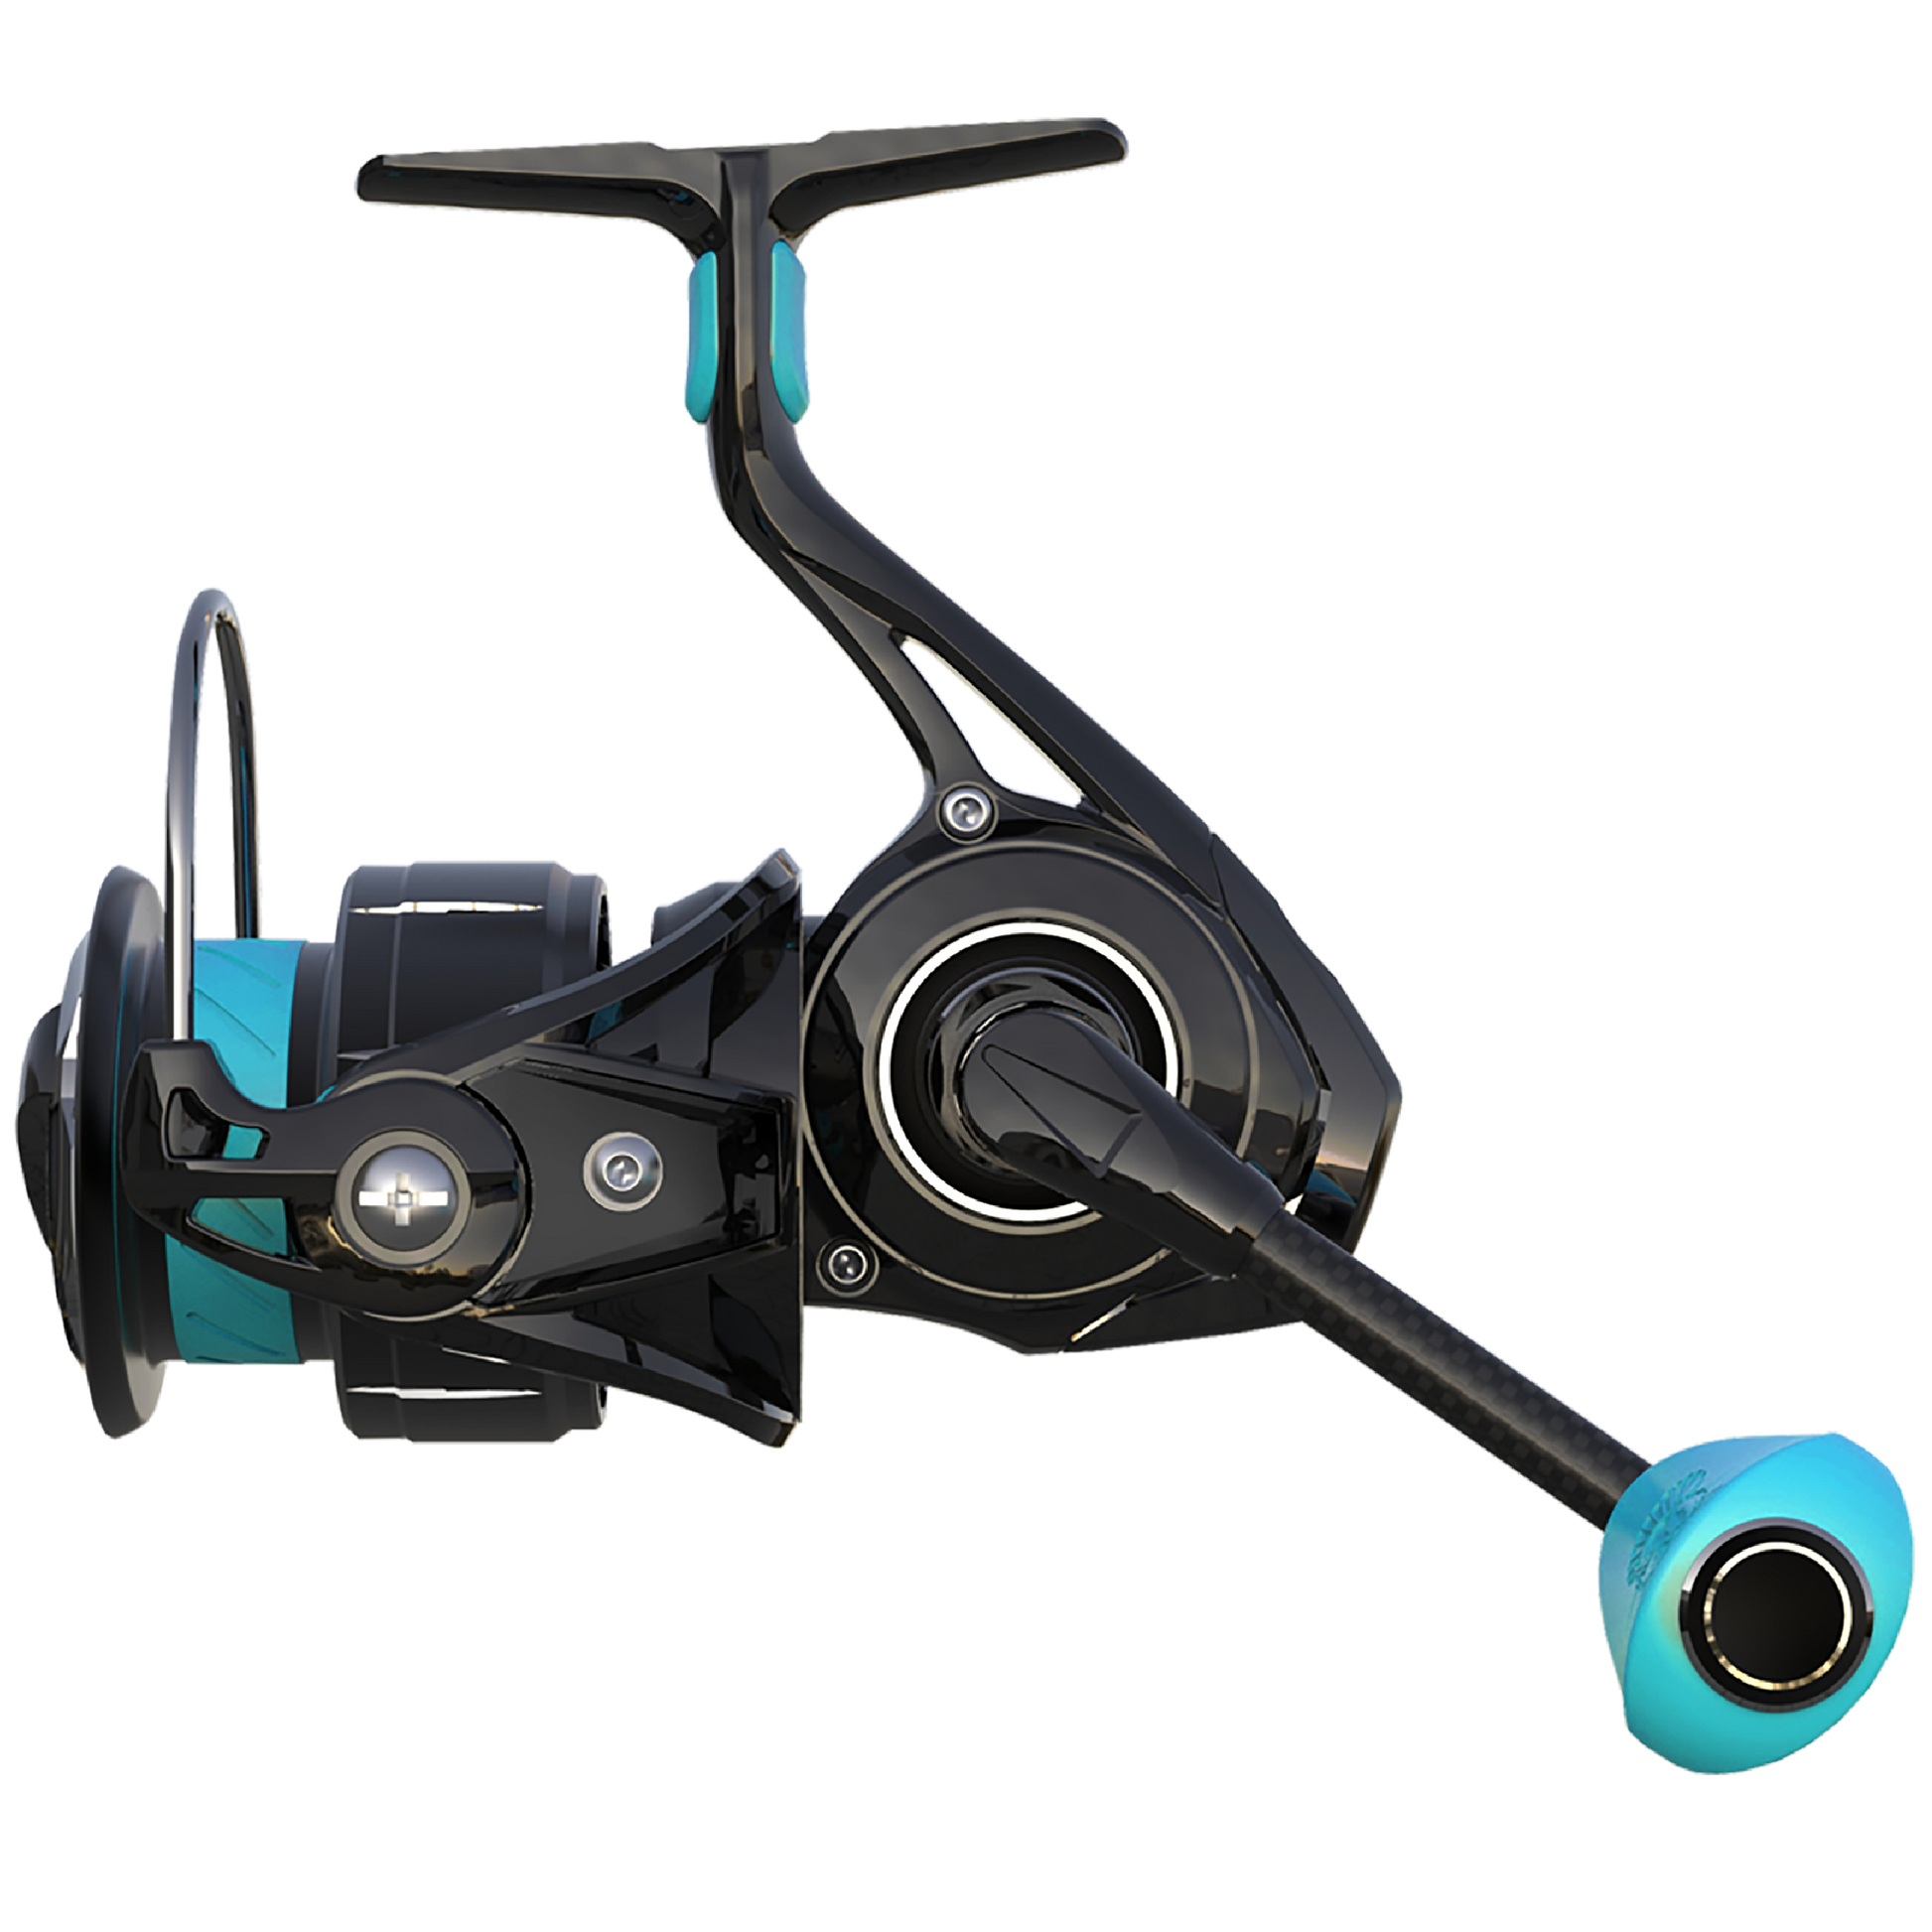 Elite Carbon Series Spinning Reels - Toadfish - Fishing Rods